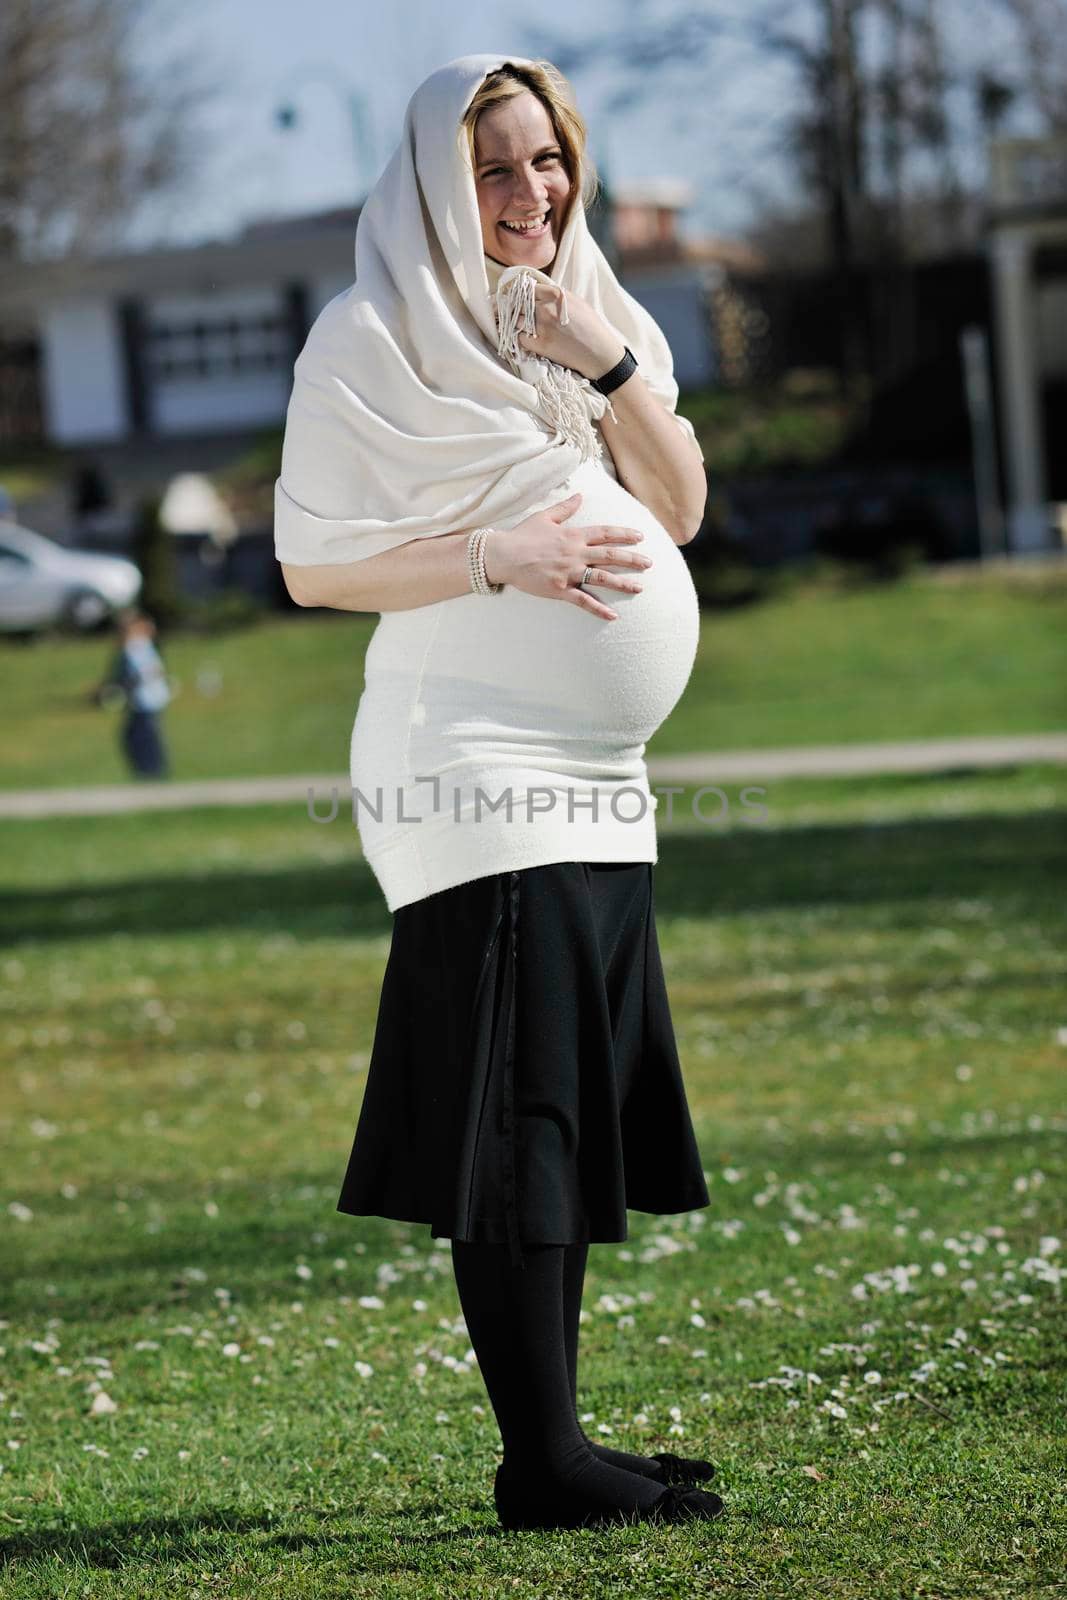 happy young pregnant woman outdoor by dotshock